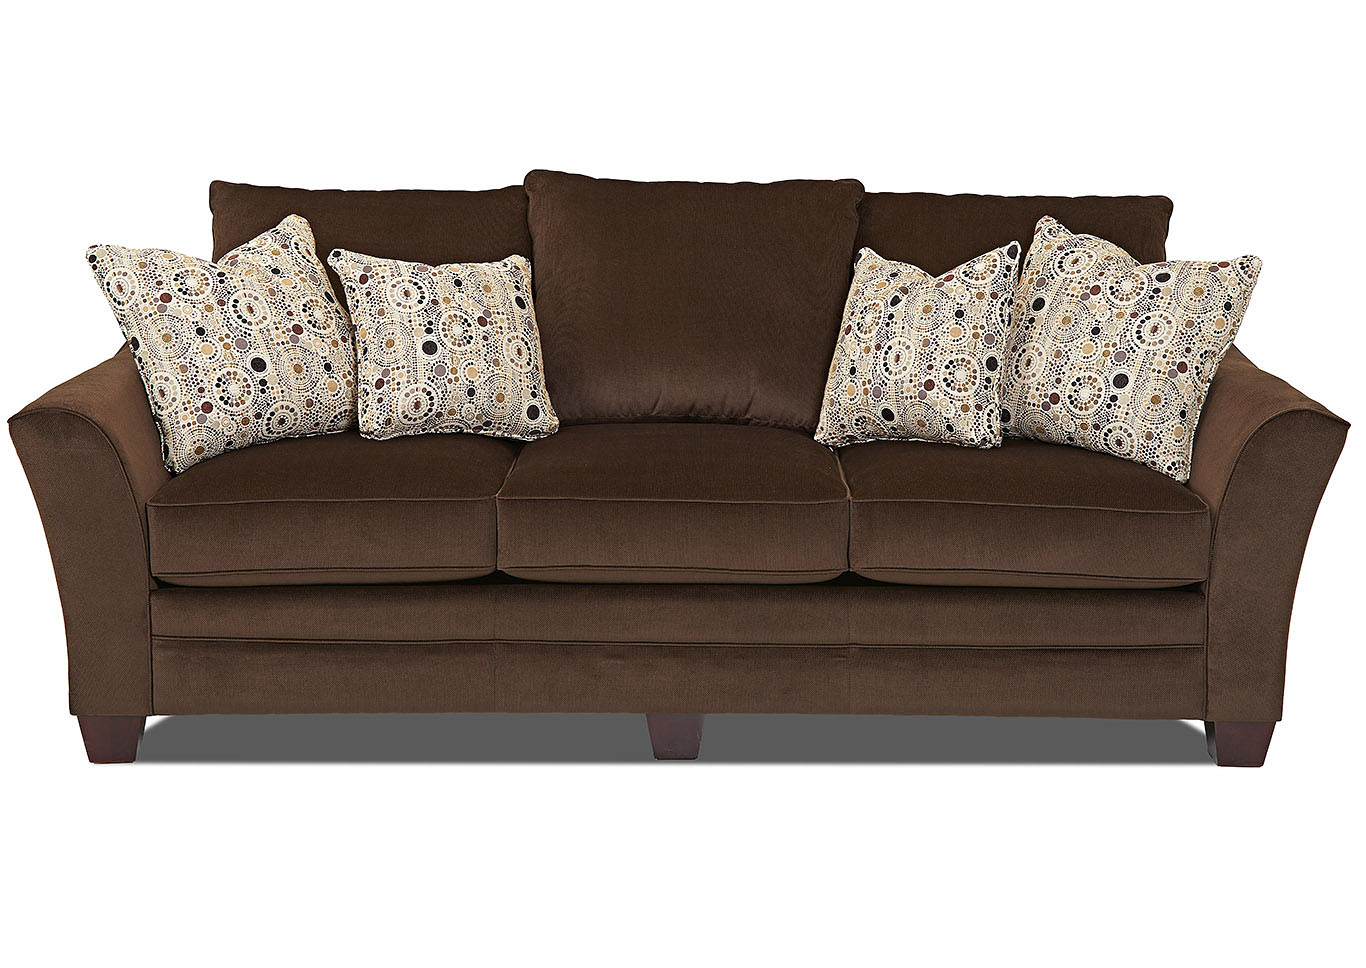 Posen Cocoa Stationary Fabric Sofa,Klaussner Home Furnishings